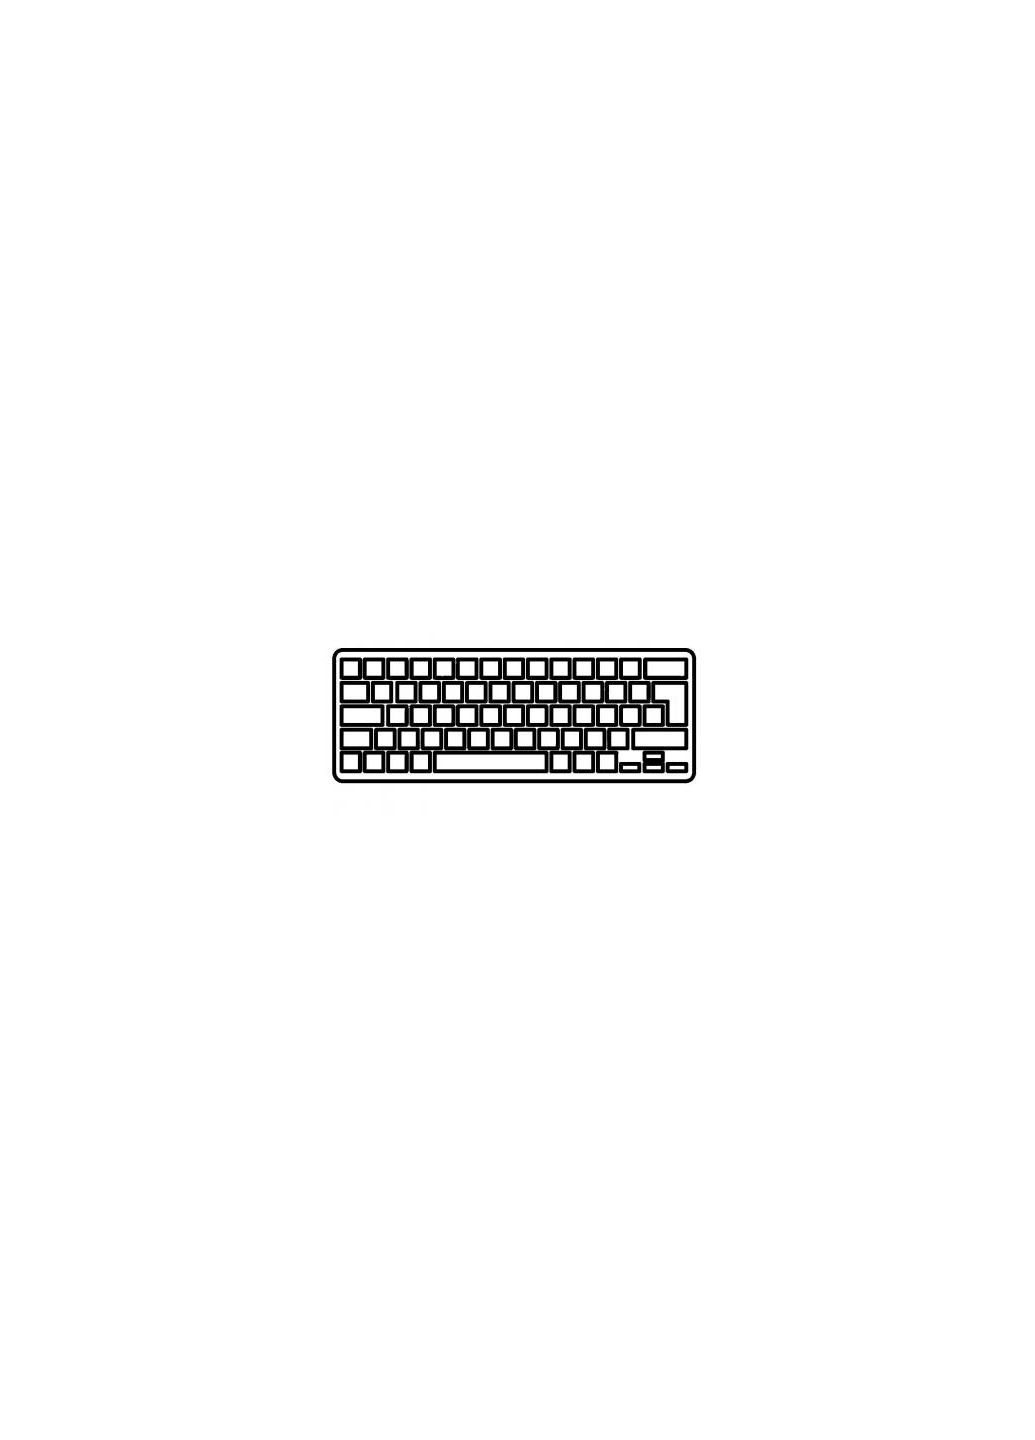 Клавиатура ноутбука (A43099) Asus a8/a8j/w3/w3j/w3000/f8/n80 серебро ua (276706947)